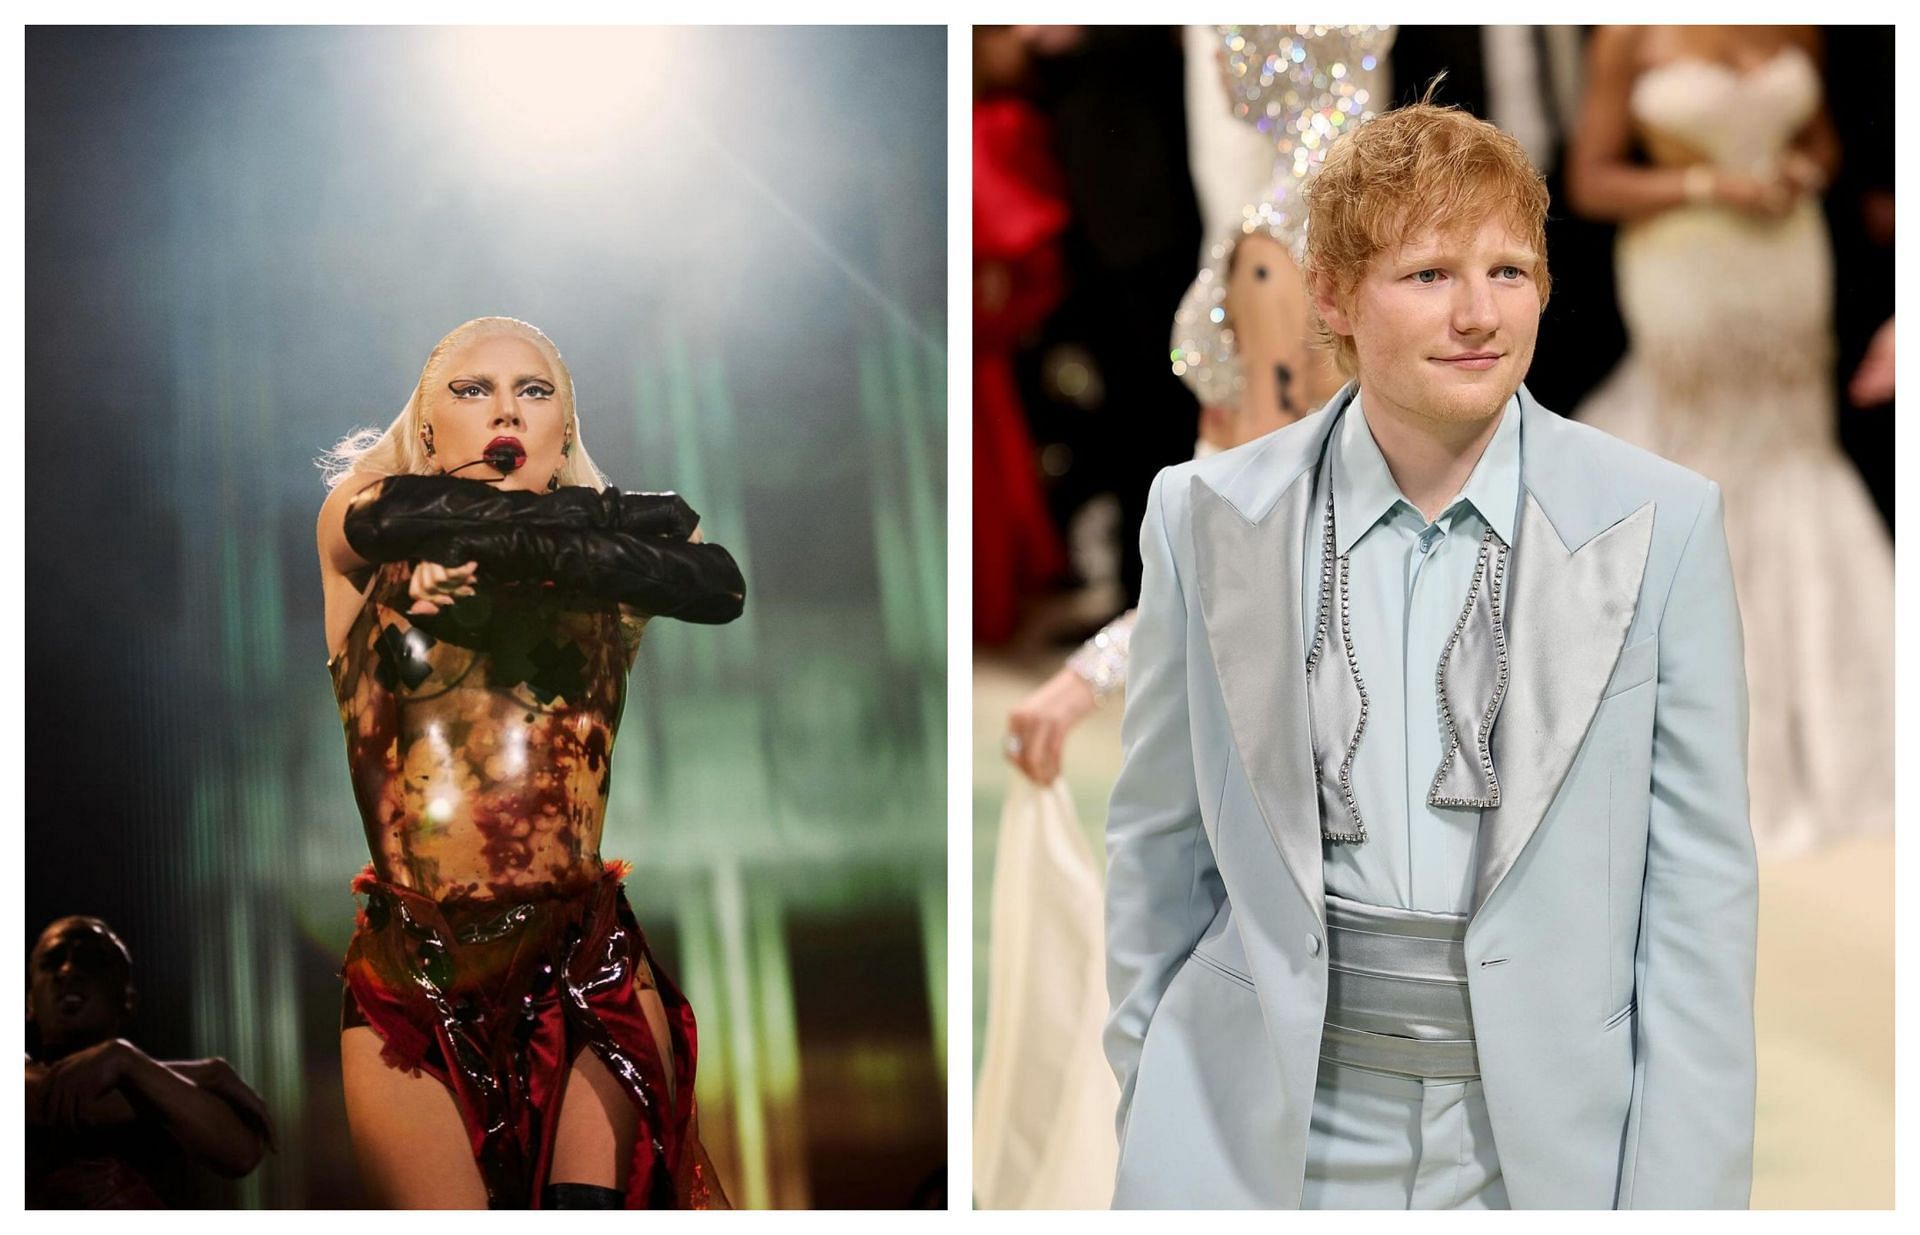 Ed Sheeran and Lady Gaga (Image via official Instagram @teddyphotos and @ladygaga)